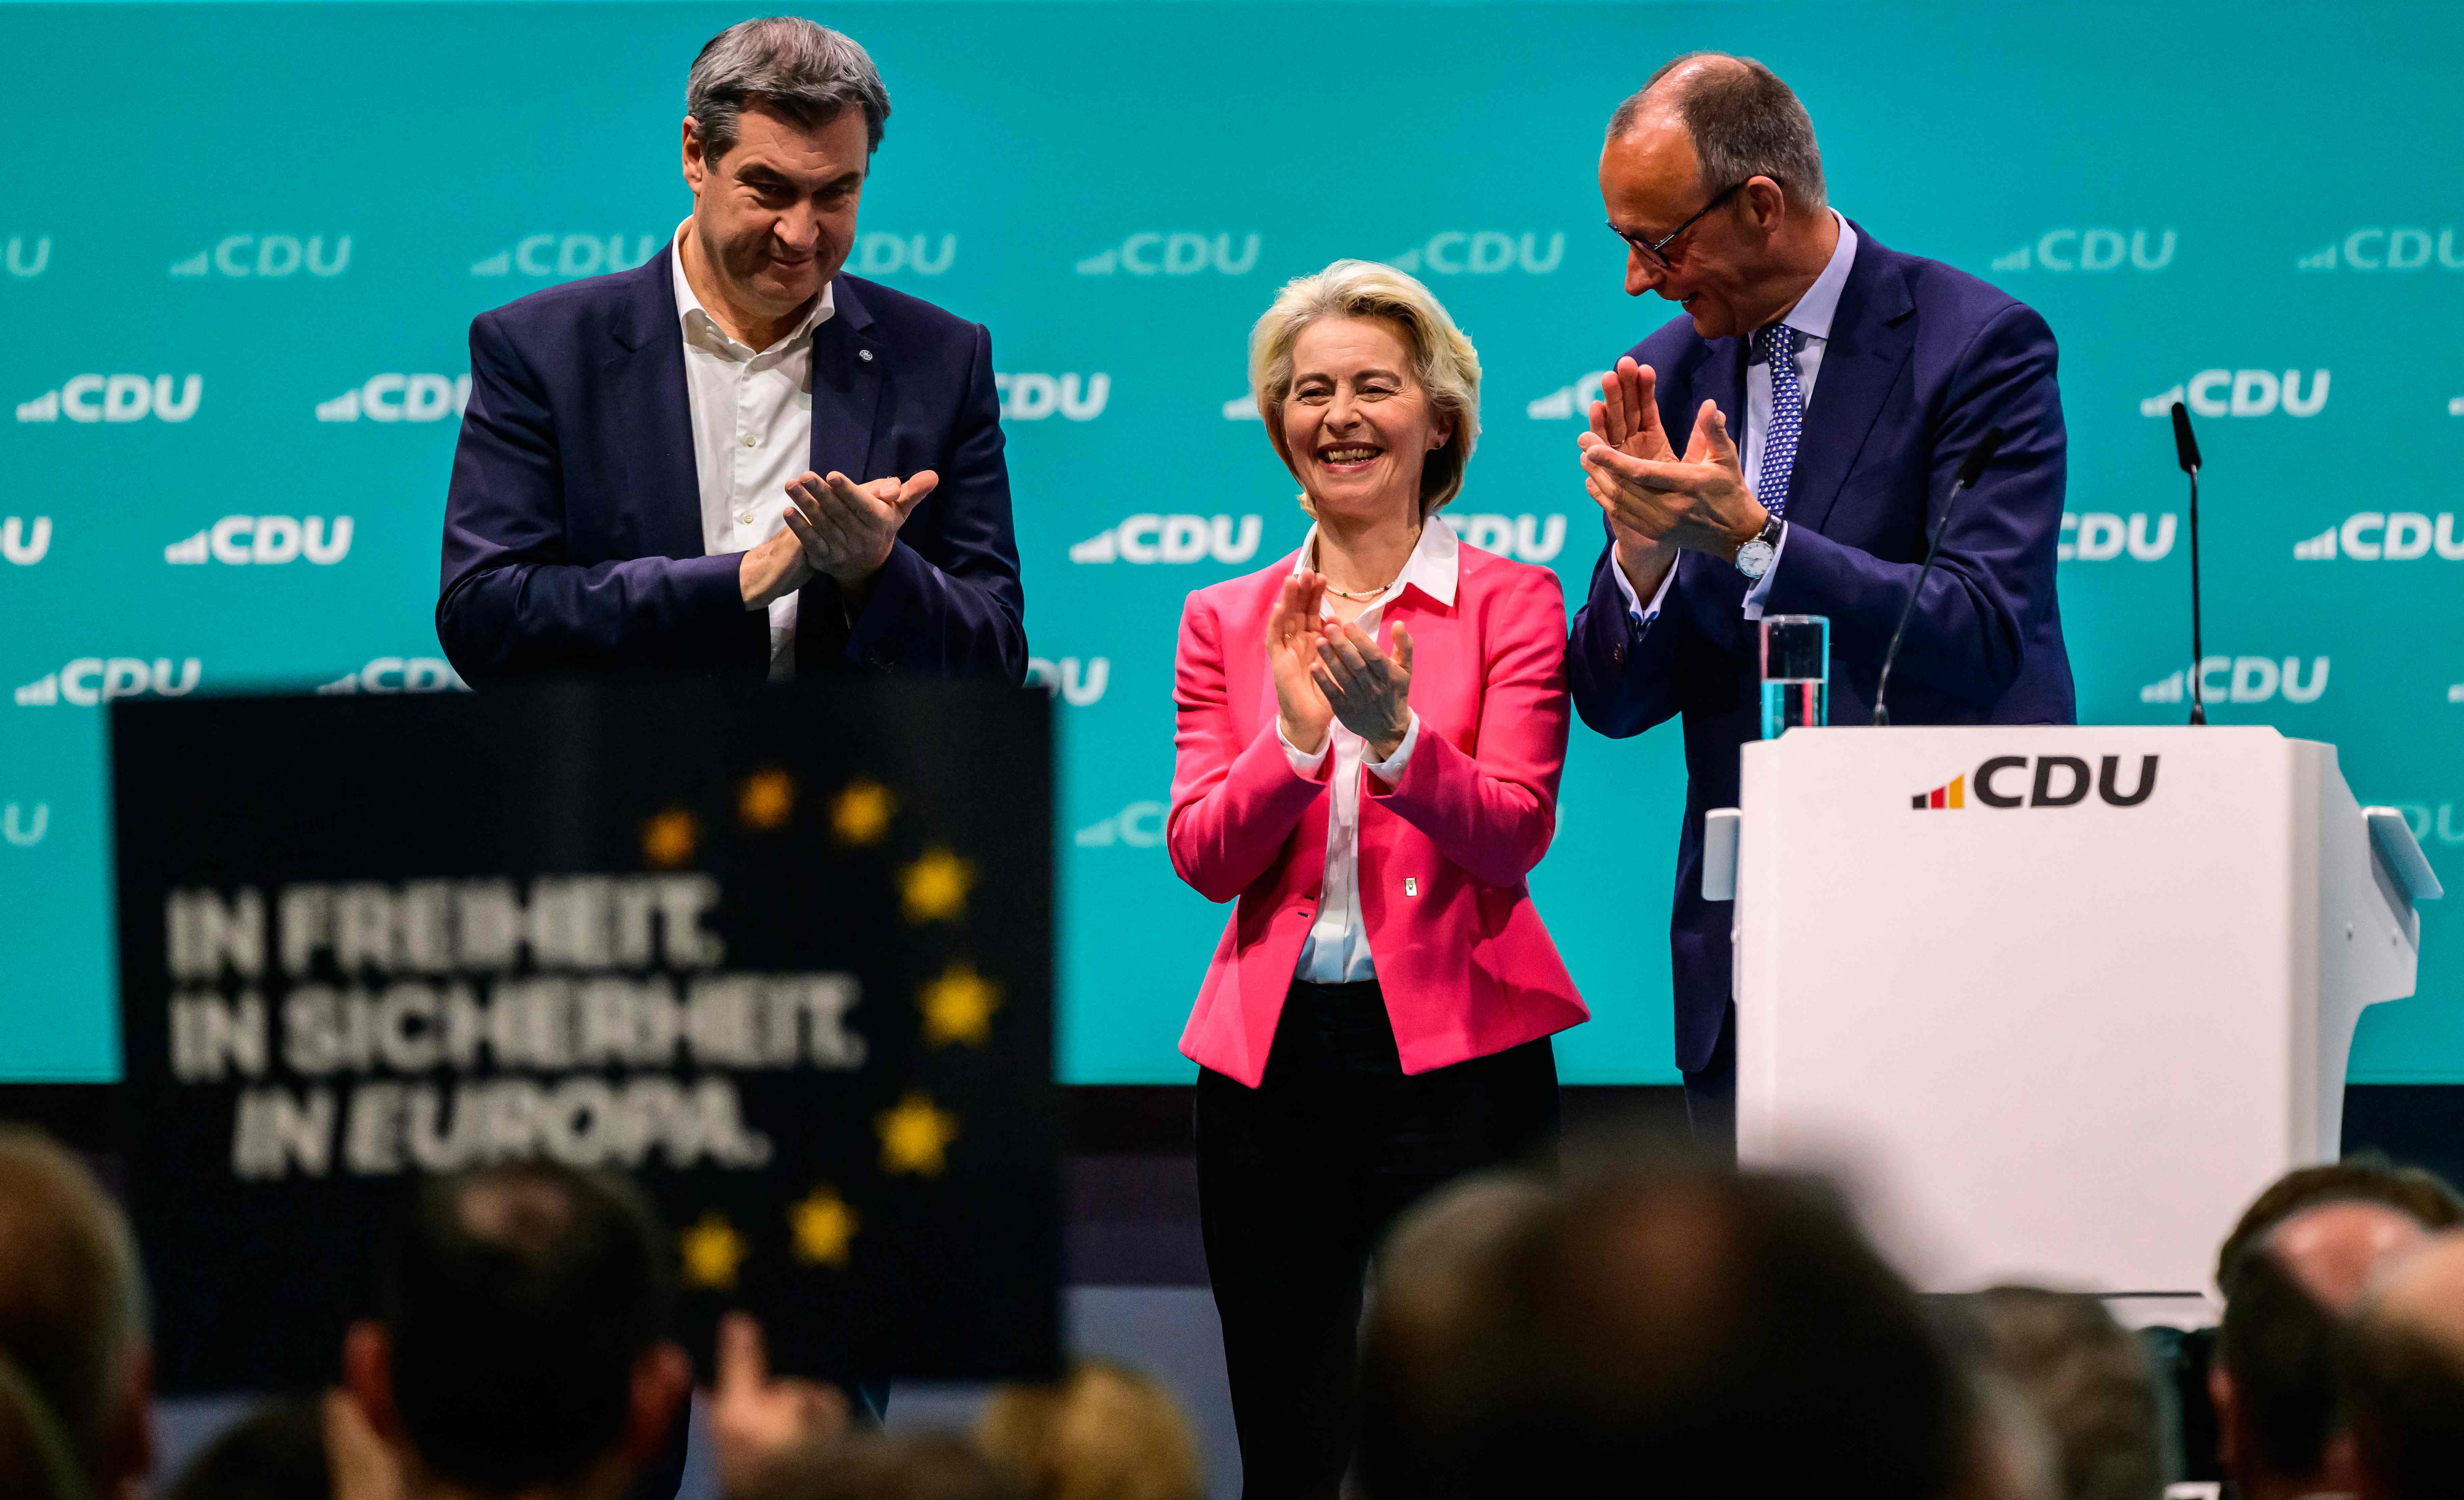 CDU startet in Europawahlkampf 